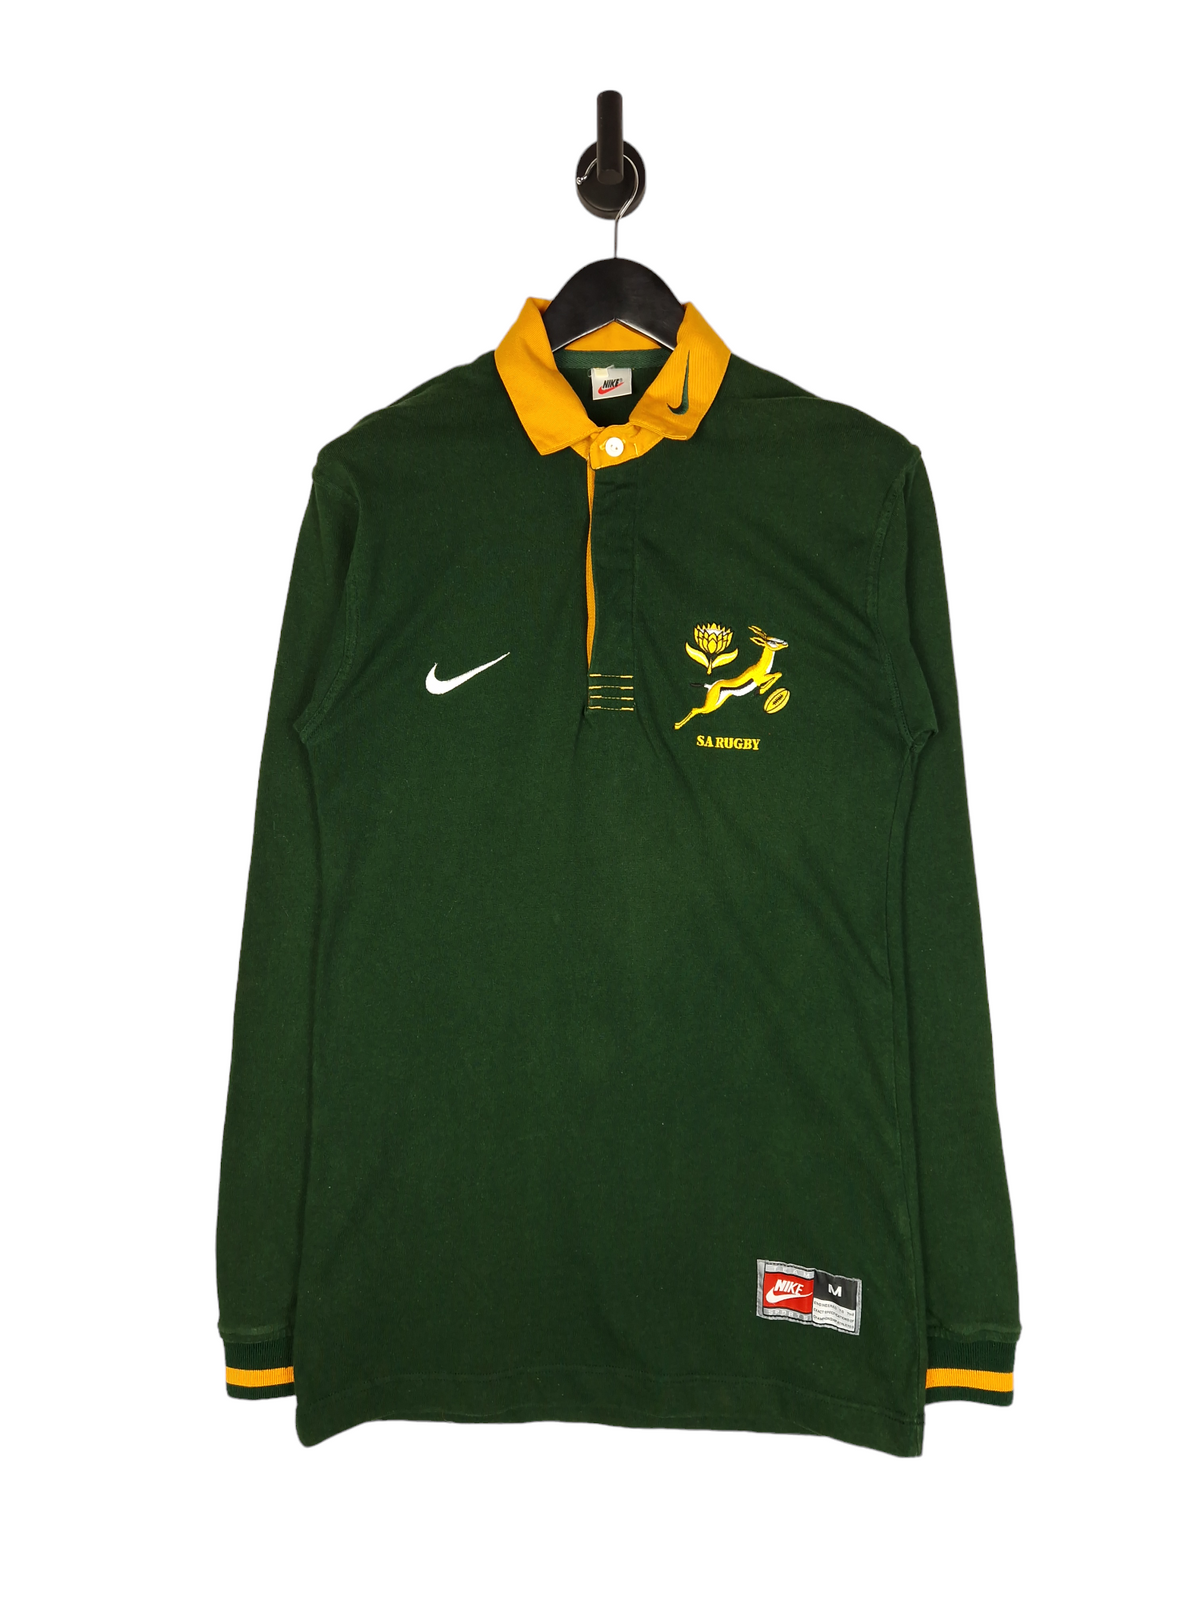 1998/99 Nike South Africa Rugby Union Shirt - Size Medium